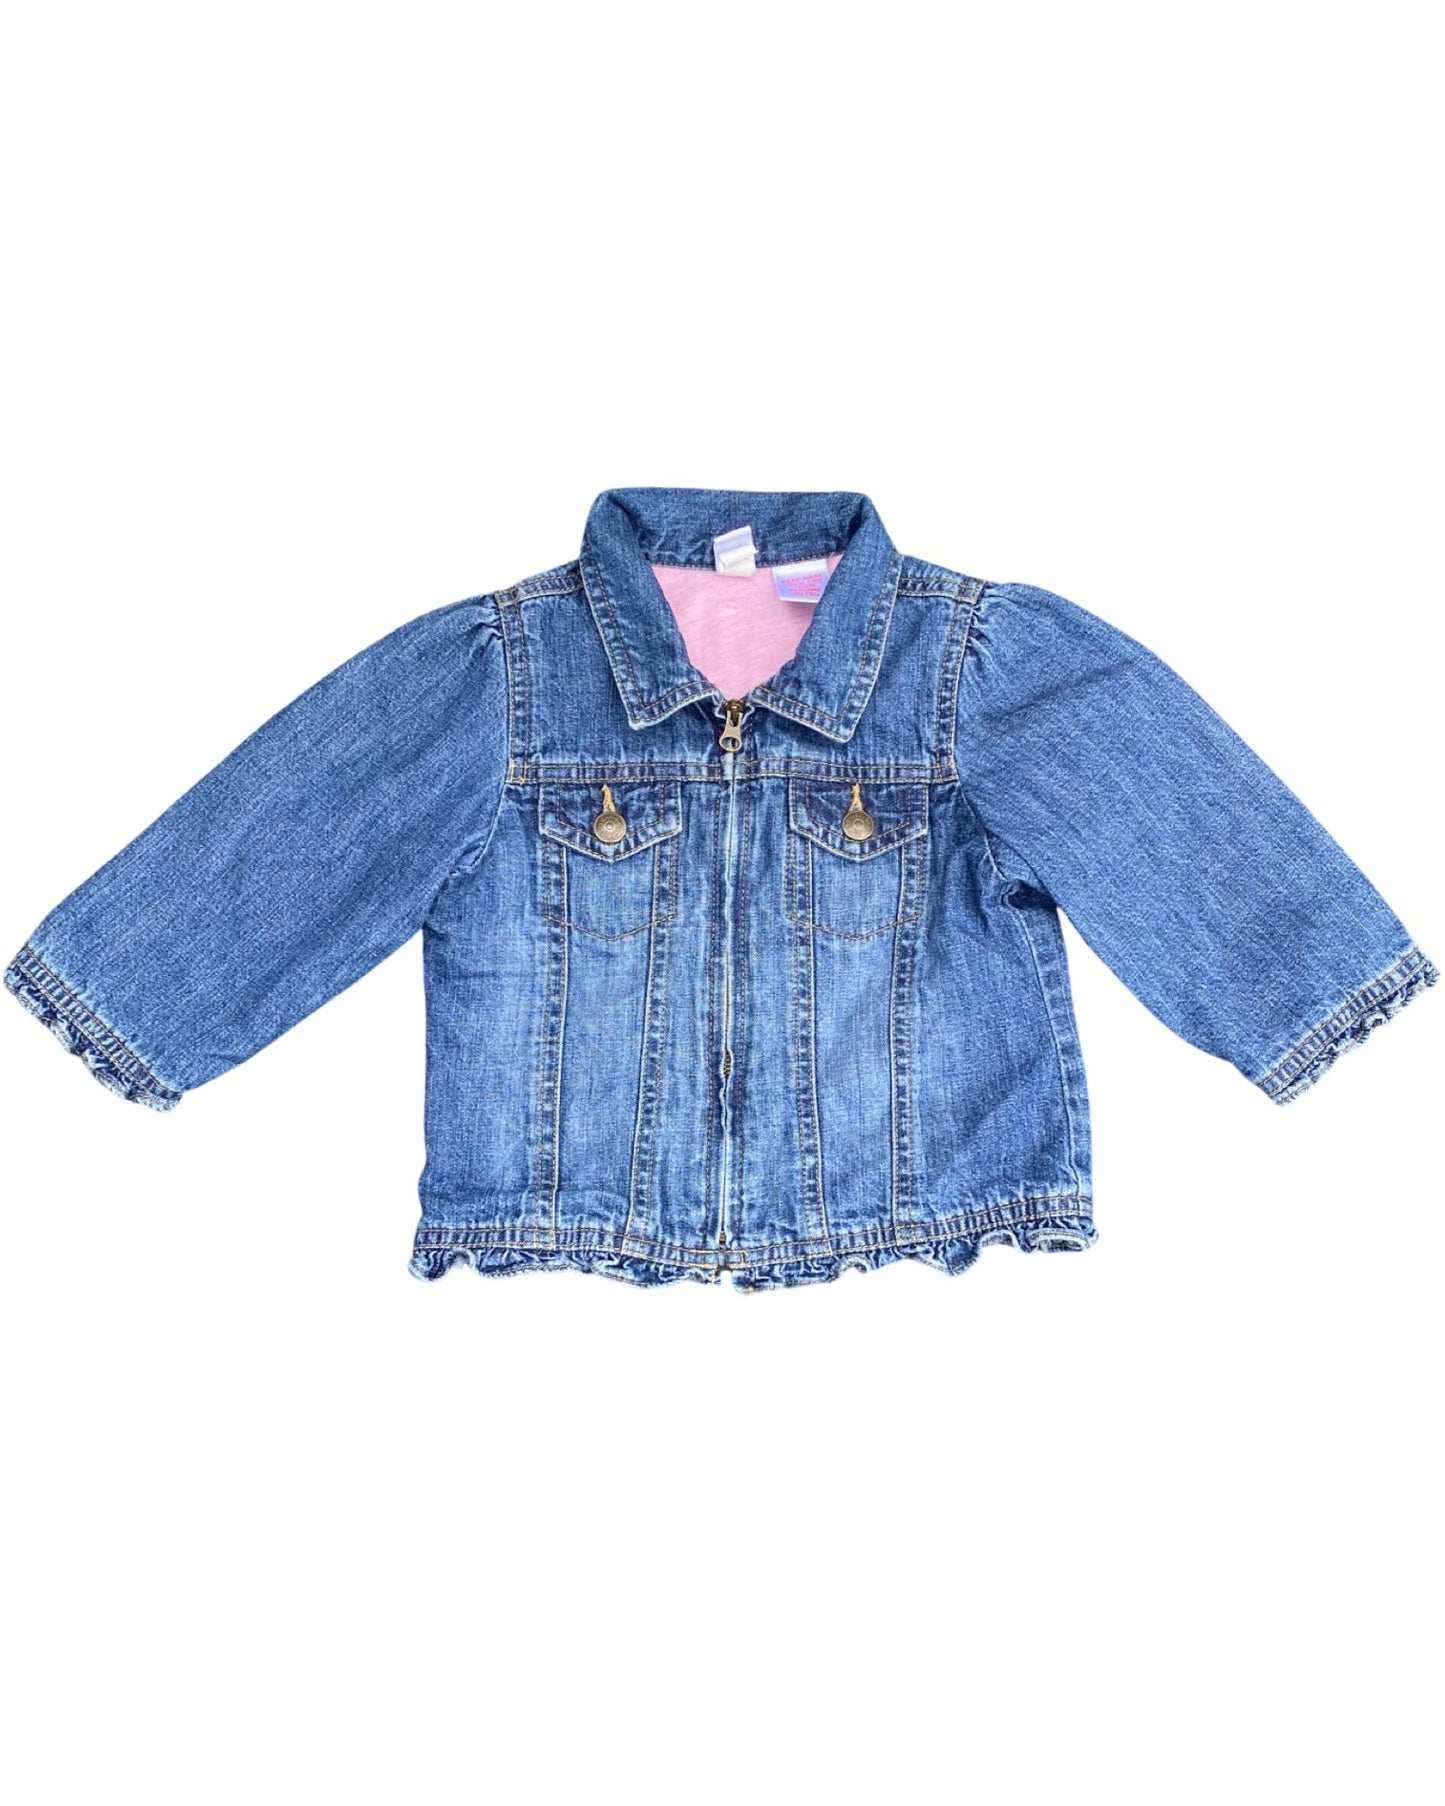 Baby Gap jersey lined denim jacket (18-24mths)